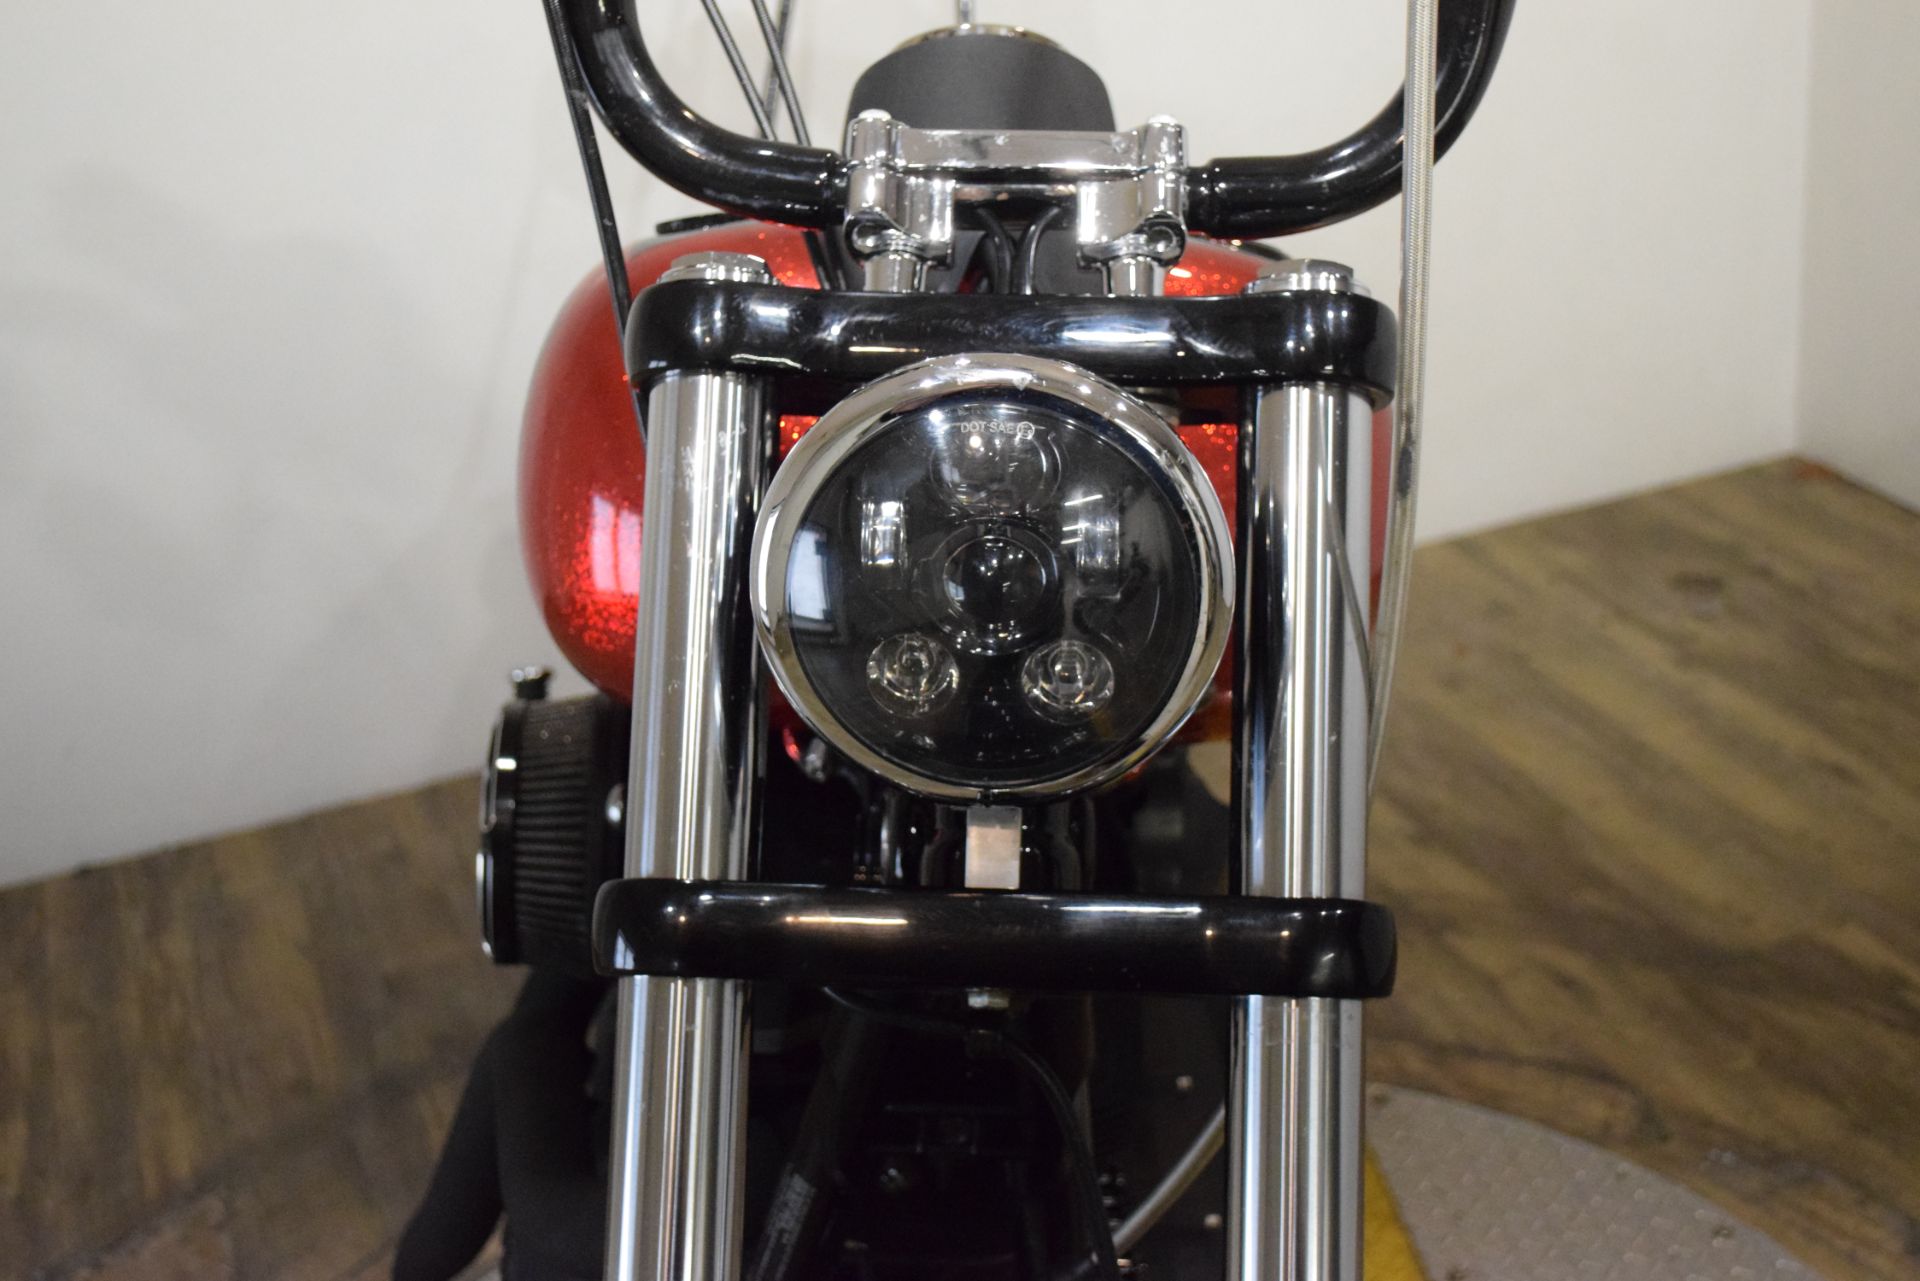 2014 Harley-Davidson Dyna® Street Bob® in Wauconda, Illinois - Photo 12